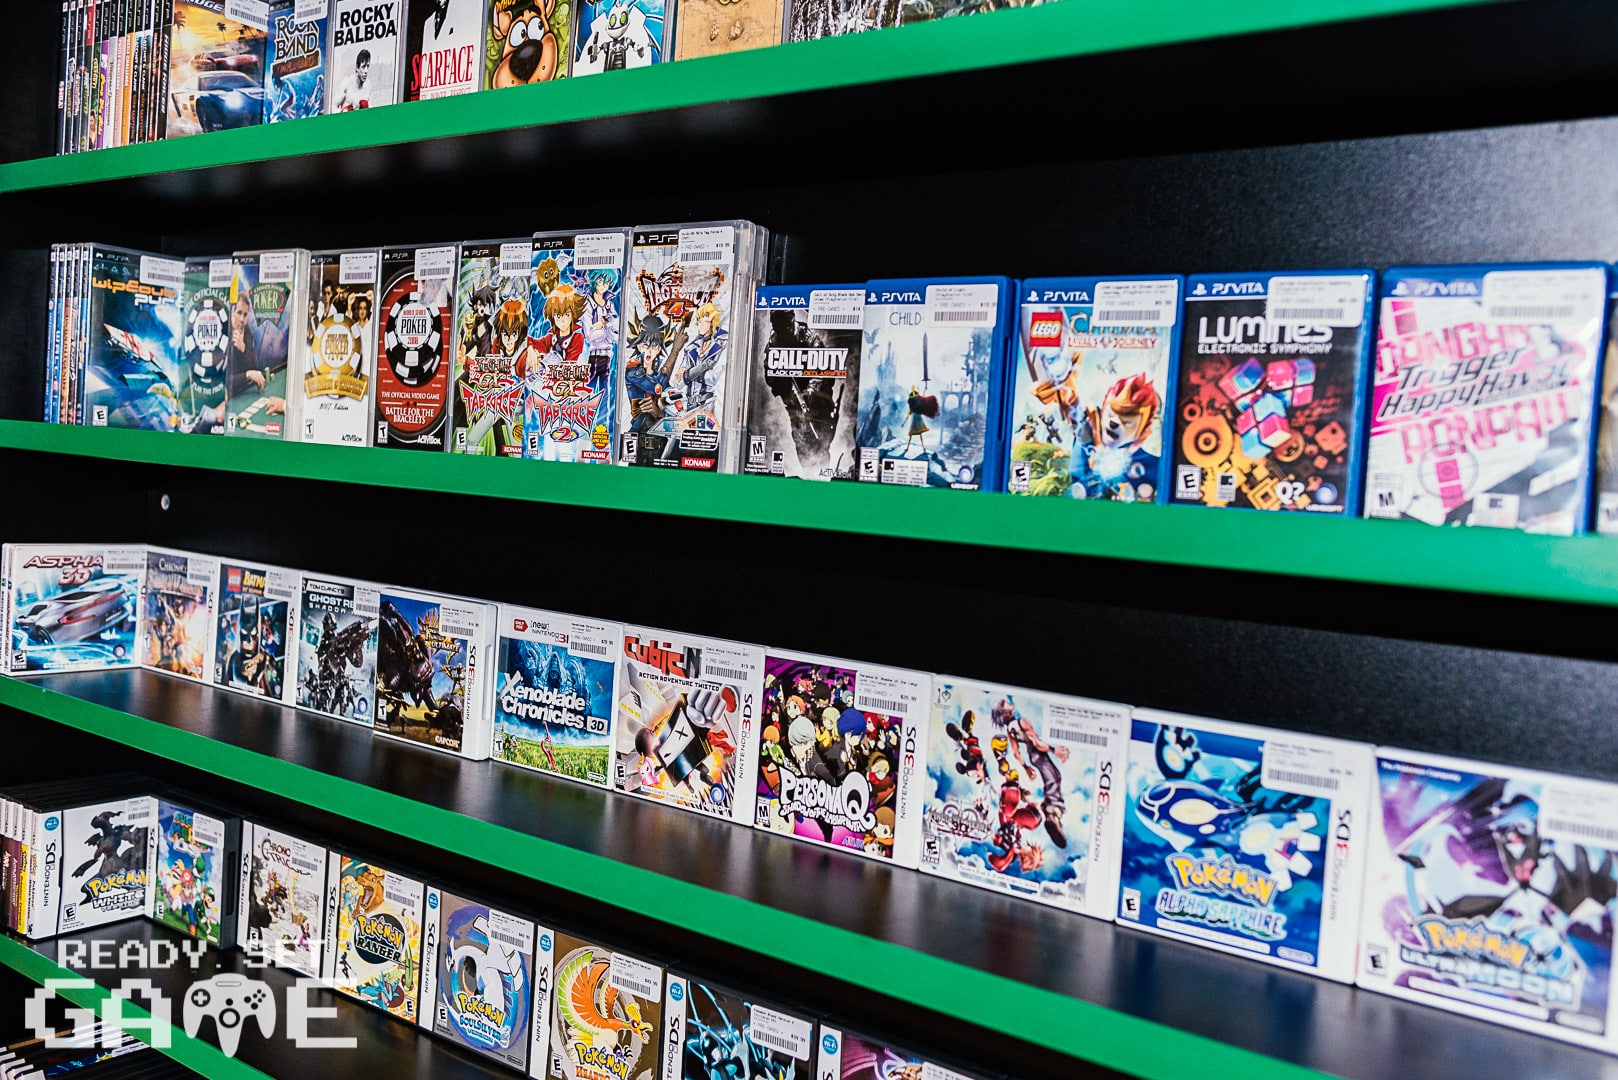 Ready set game videogame shelves.